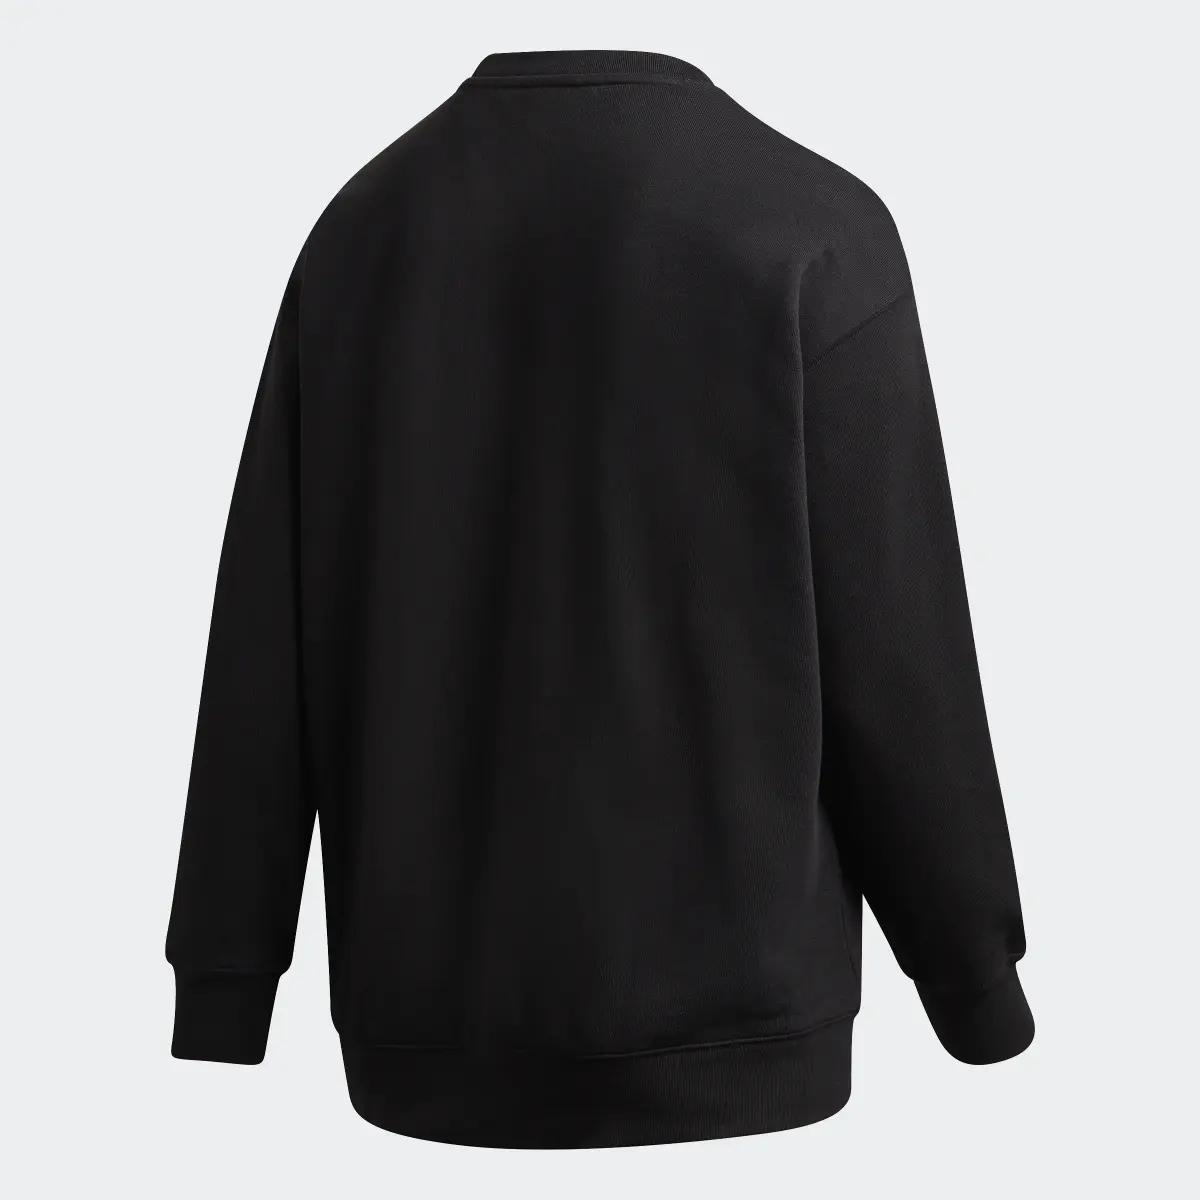 Adidas Trefoil Crew Sweatshirt (Plus Size). 2